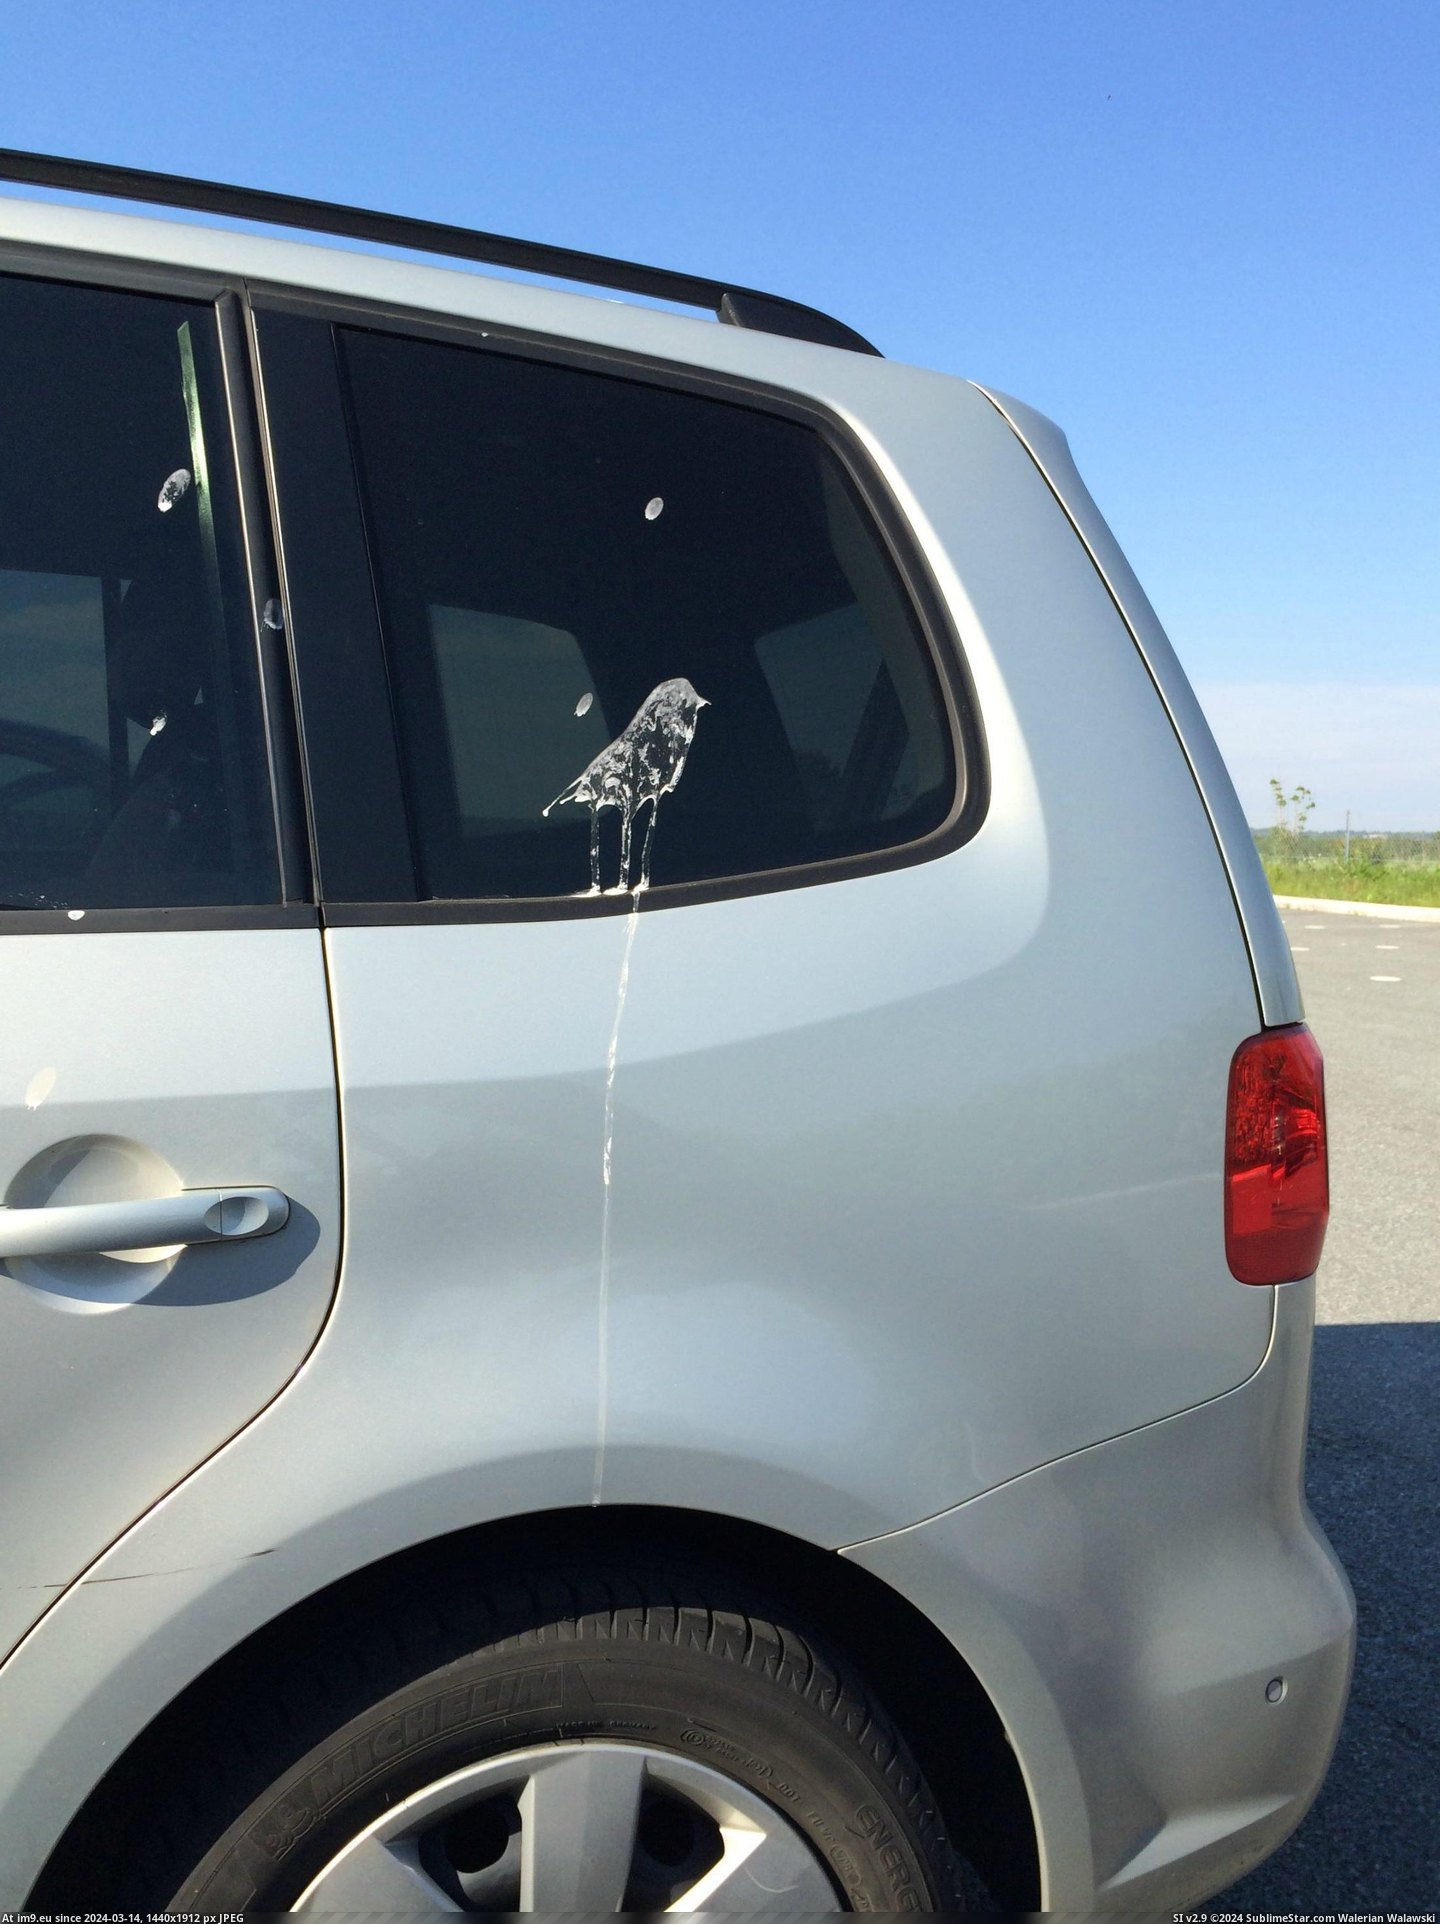 #Funny #Lot #Birdpoop #Parking #Masterpiece [Funny] Birdpoop masterpiece at the parking lot Pic. (Bild von album My r/FUNNY favs))